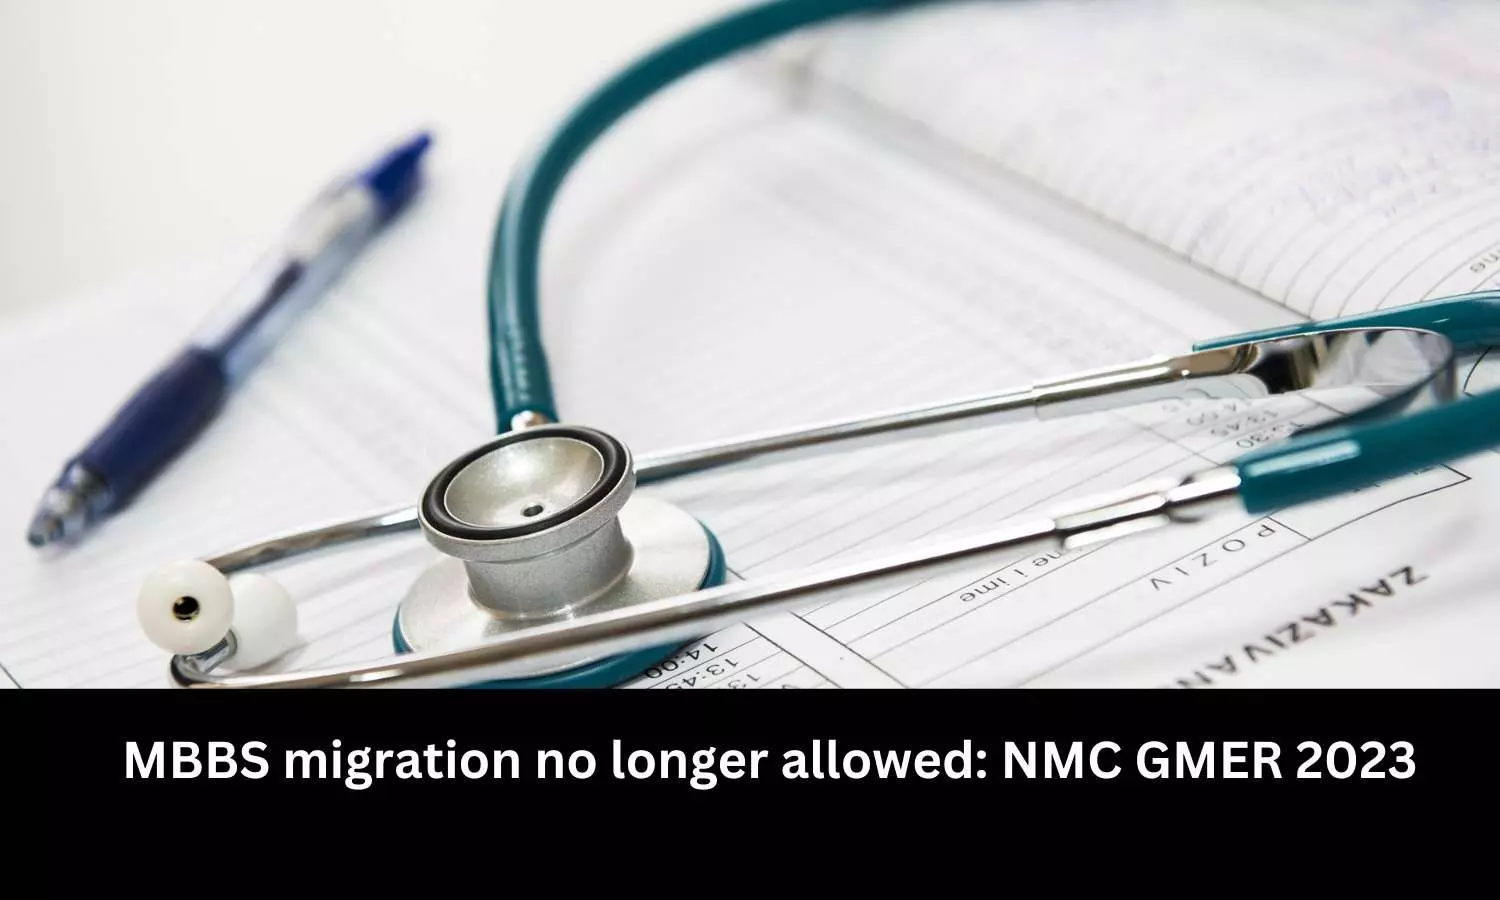 NMC GMER 2023: MBBS migration no longer allowed